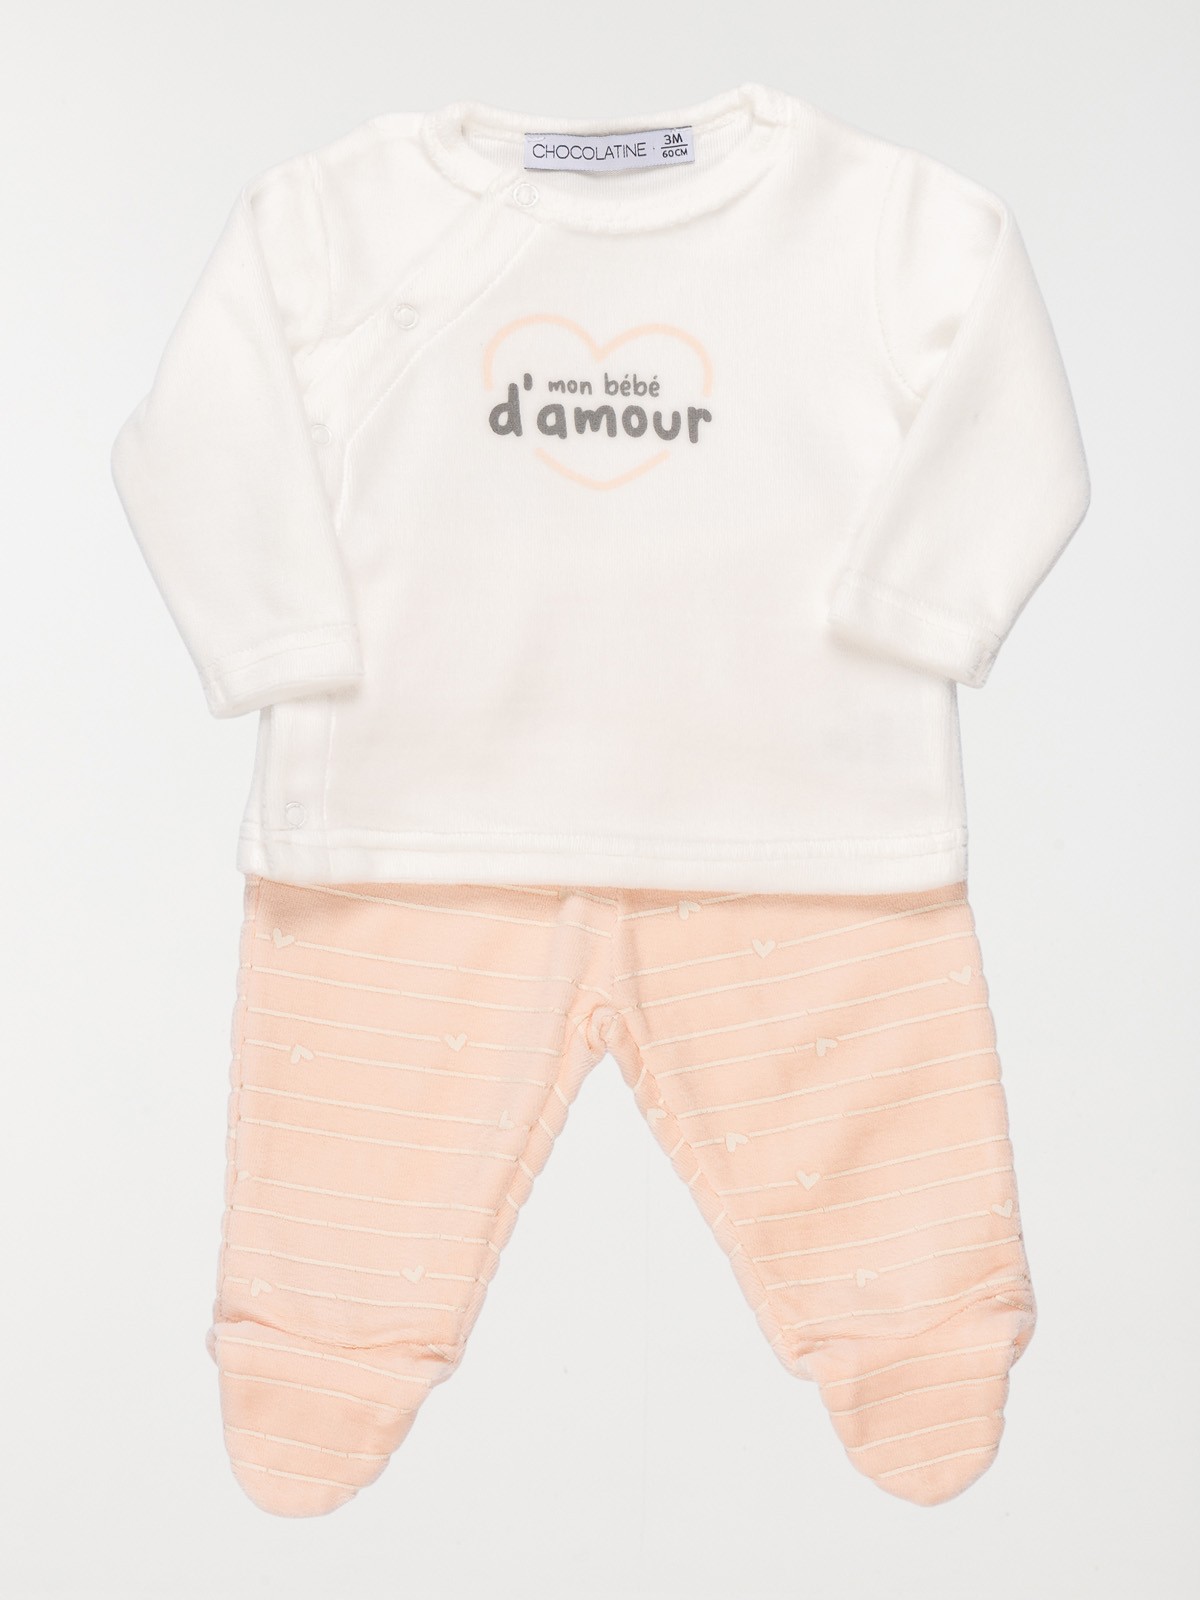 Pyjama naissance message fille (0-9M) - DistriCenter